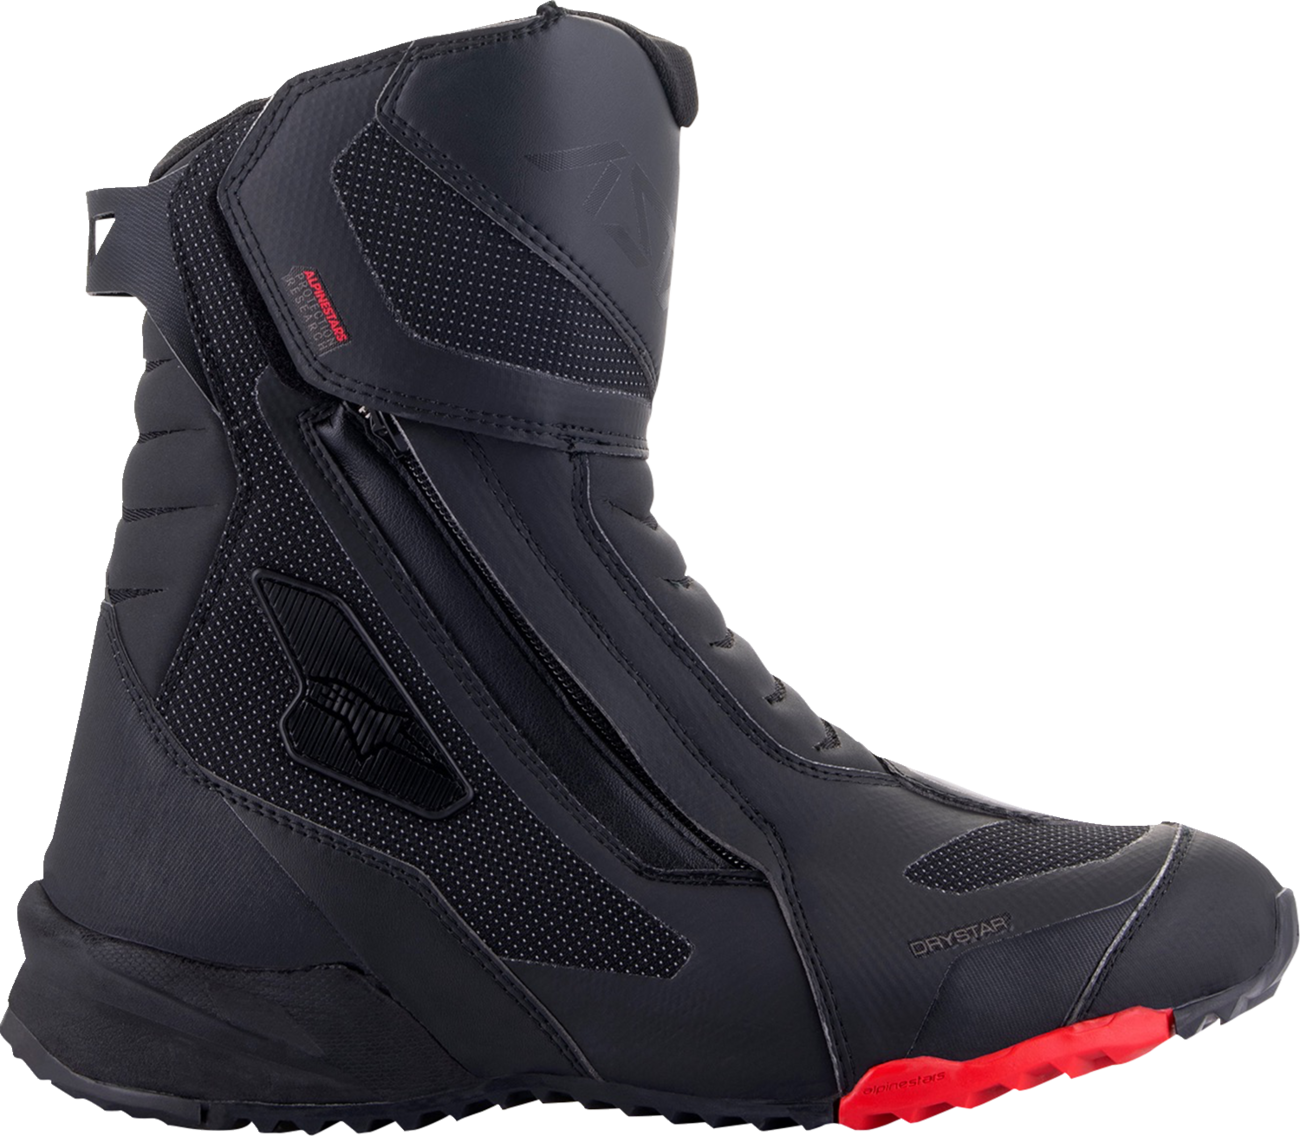 ALPINESTARS RT-7 Drystar® Boots - Black/Red - US 10 / EU 43 2443023-13-43